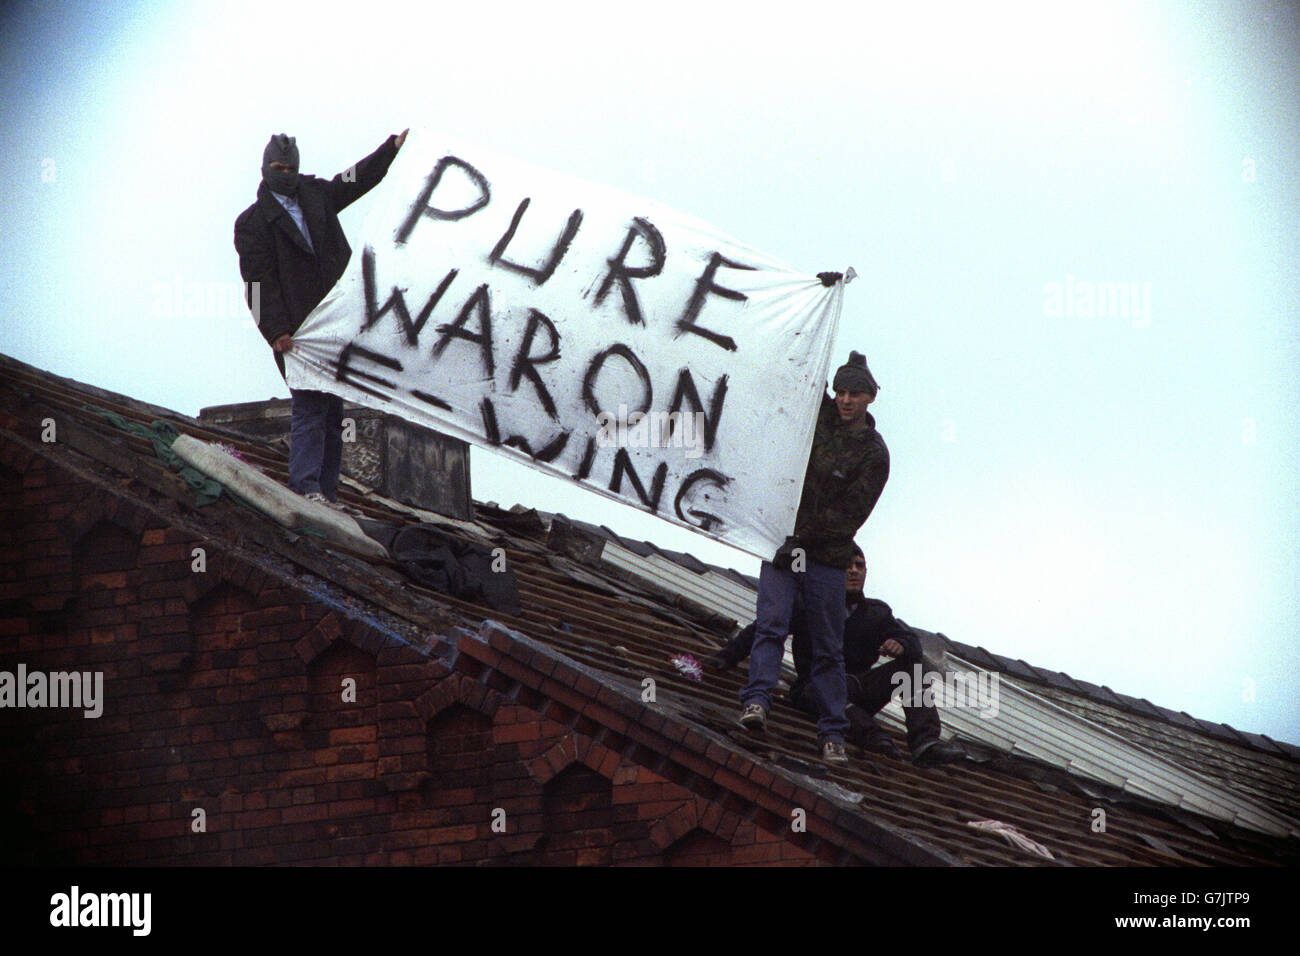 British Crime - Prison - Riots - Strangeways - Manchester - 1990. Prisoners display a banner declaring 'Pure war on E-Wing' on the roof of Strangeways prison. Stock Photo